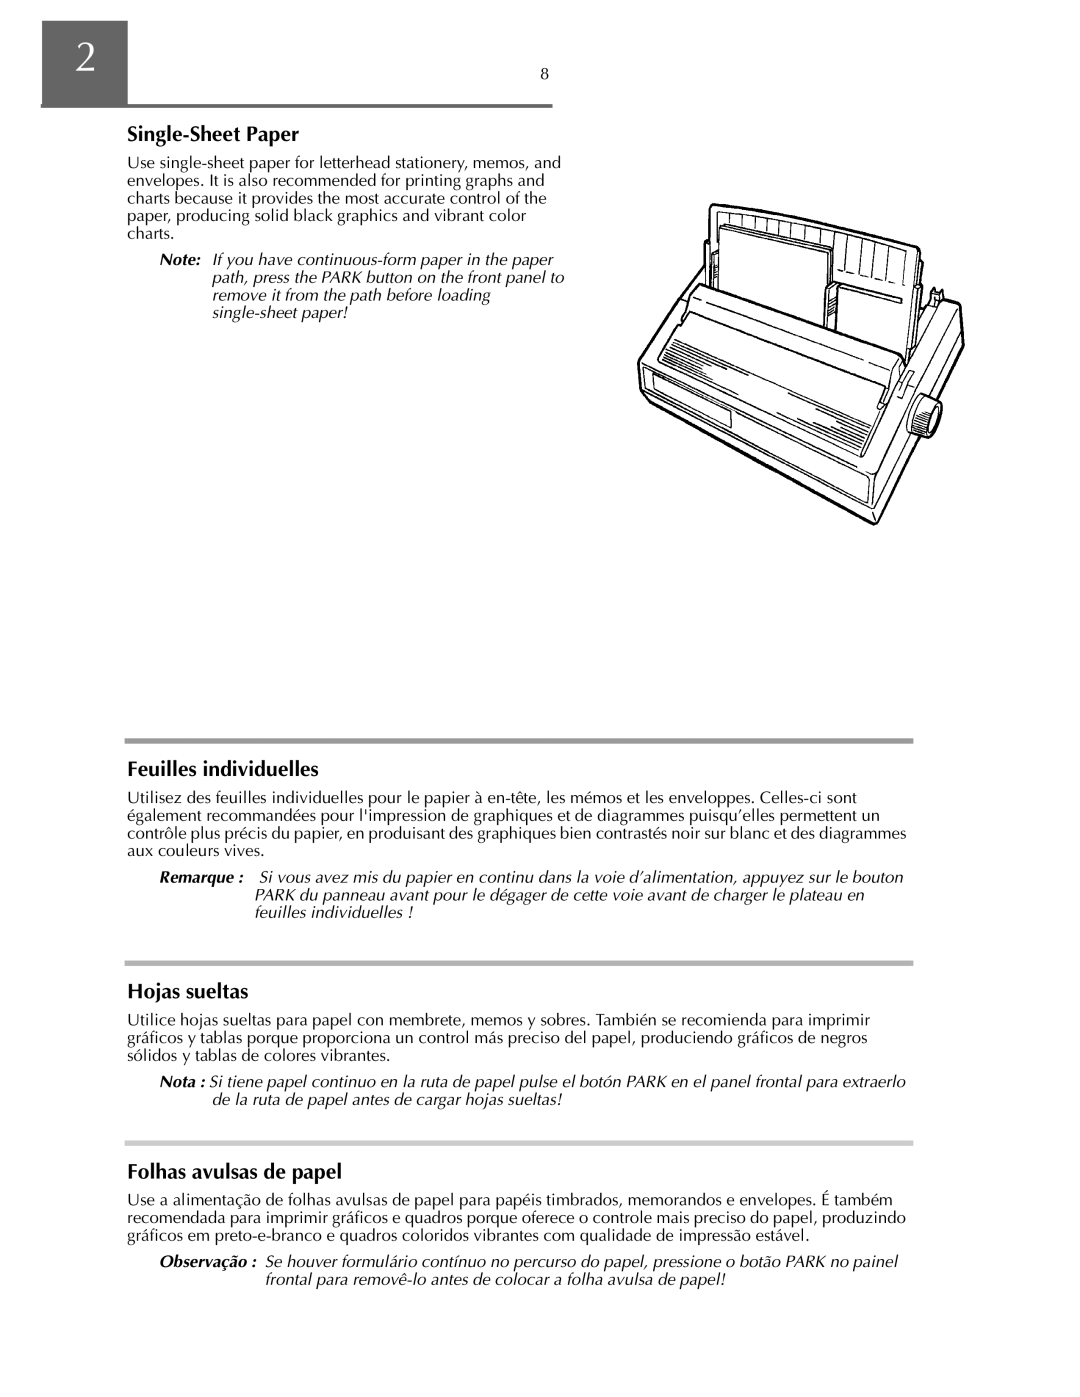 Oki ML590 manual Single-Sheet Paper, Feuilles individuelles, Hojas sueltas, Folhas avulsas de papel 